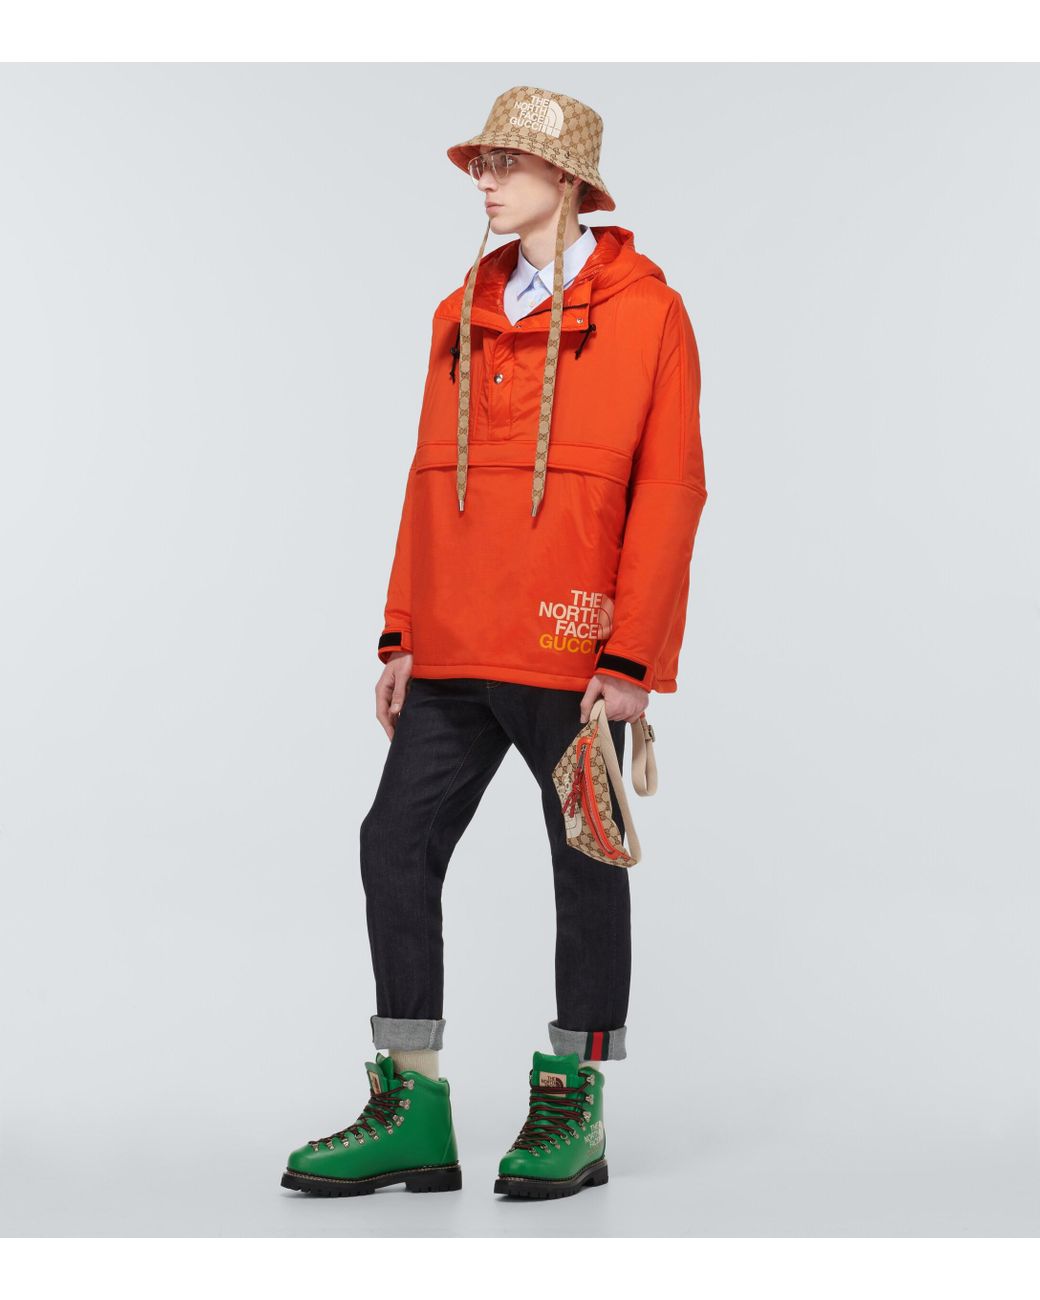 Gucci The North Face X Windbreaker Jacket in Orange for Men | Lyst Australia